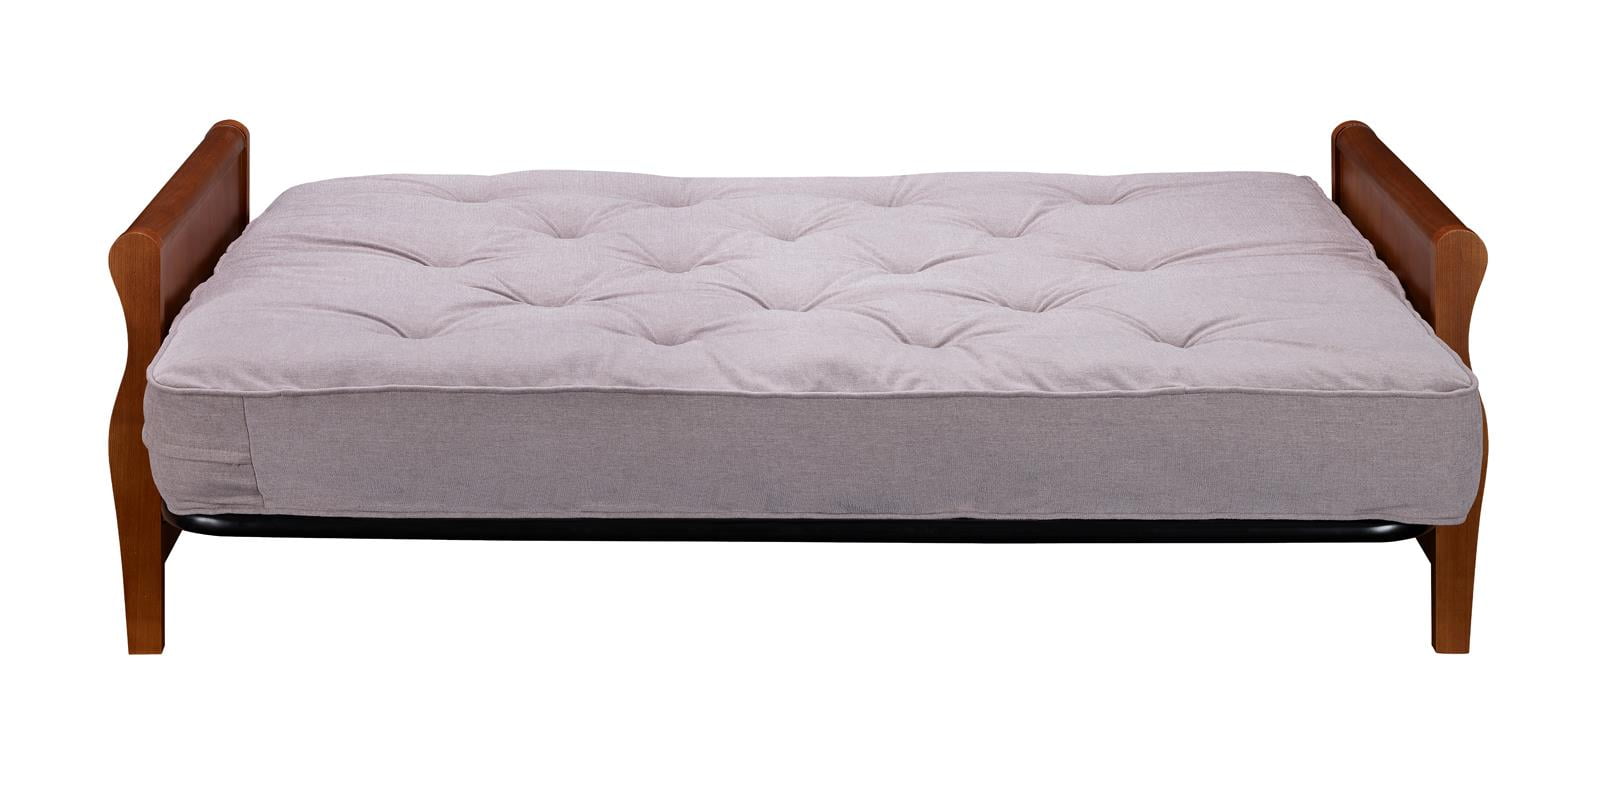 dhp futon mattress canada